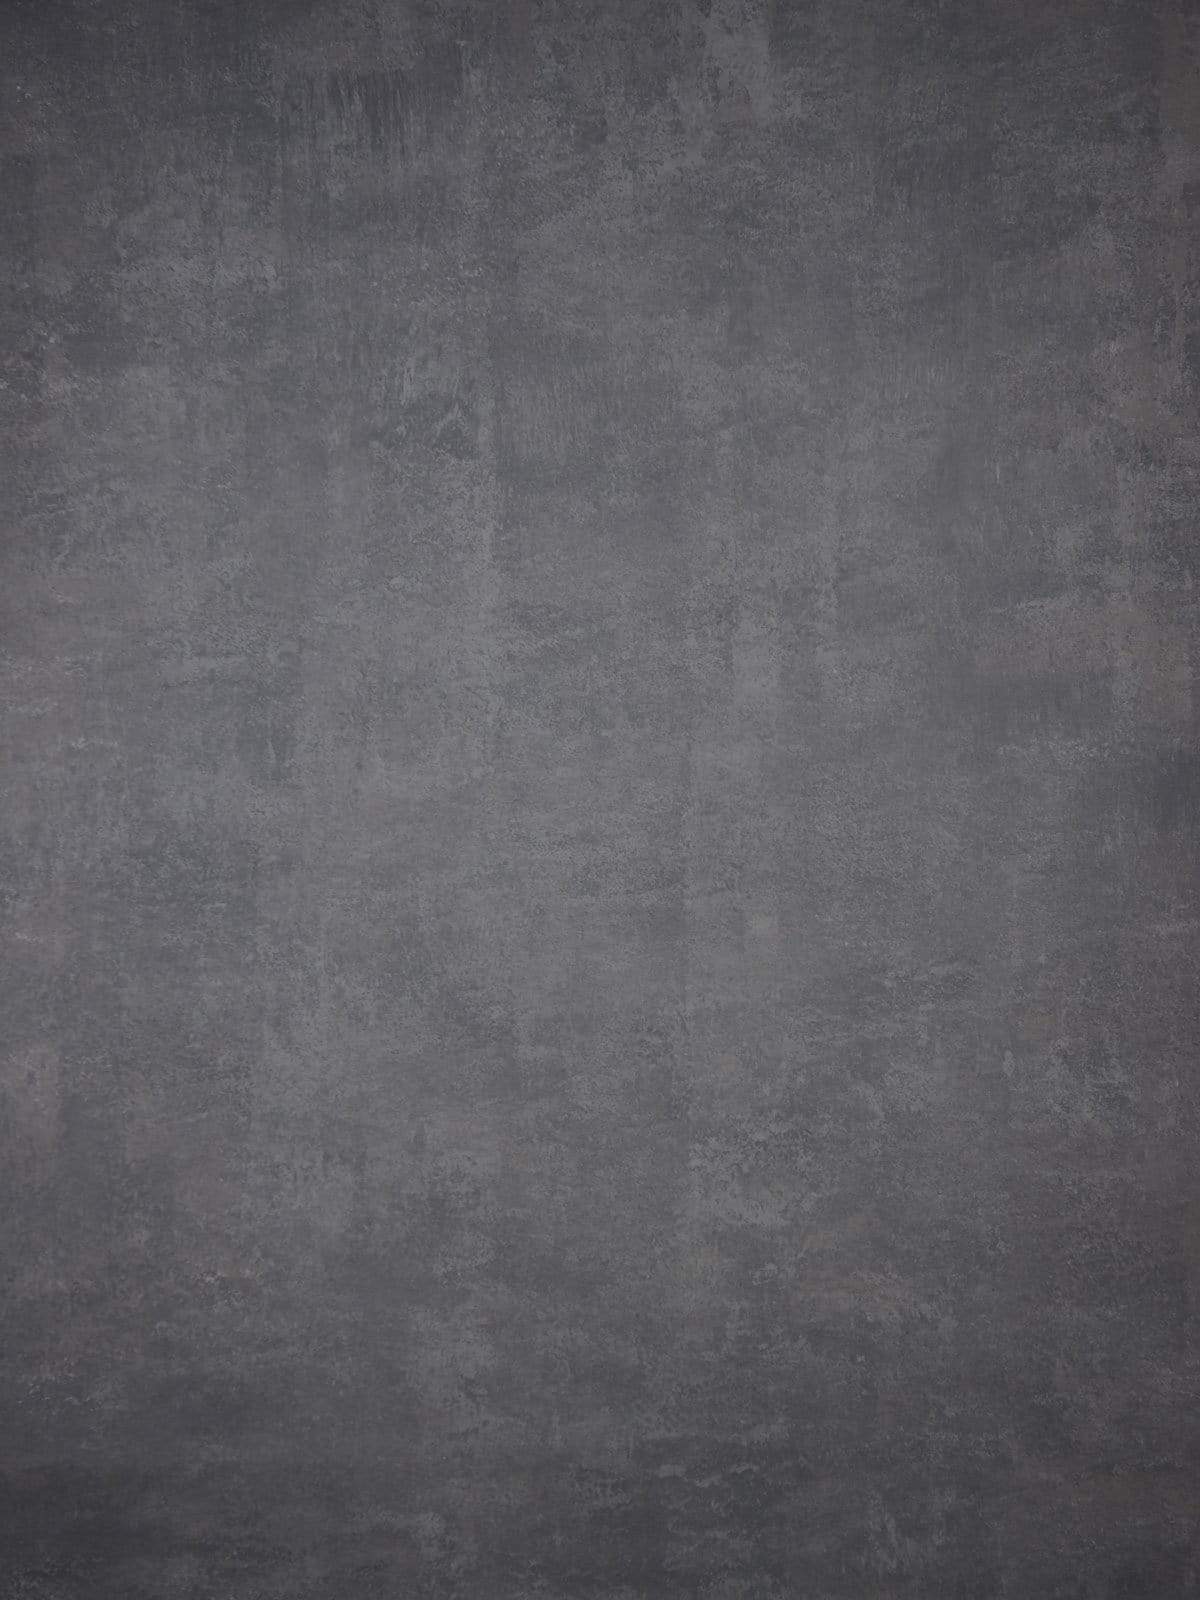 Kate Abstract Textured Dark Grey Backdrop for Photography – Katebackdrop